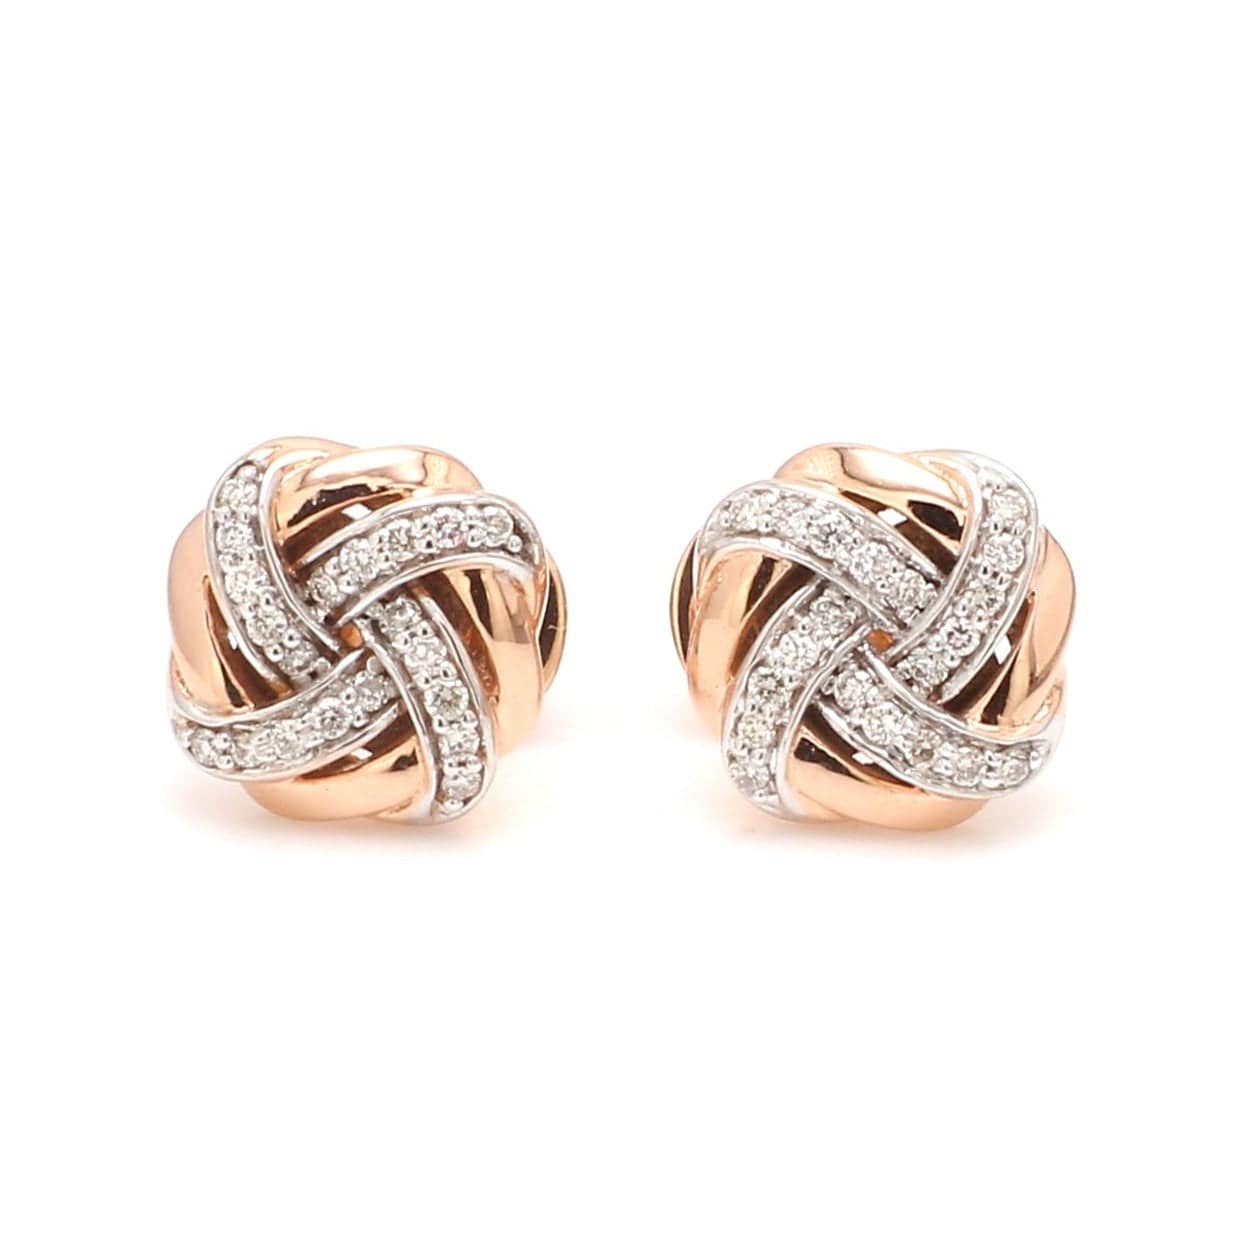 CANDERE  A KALYAN JEWELLERS COMPANY BIS Hallmark 14K Rose Gold Earrings  for Women  Amazonin Fashion